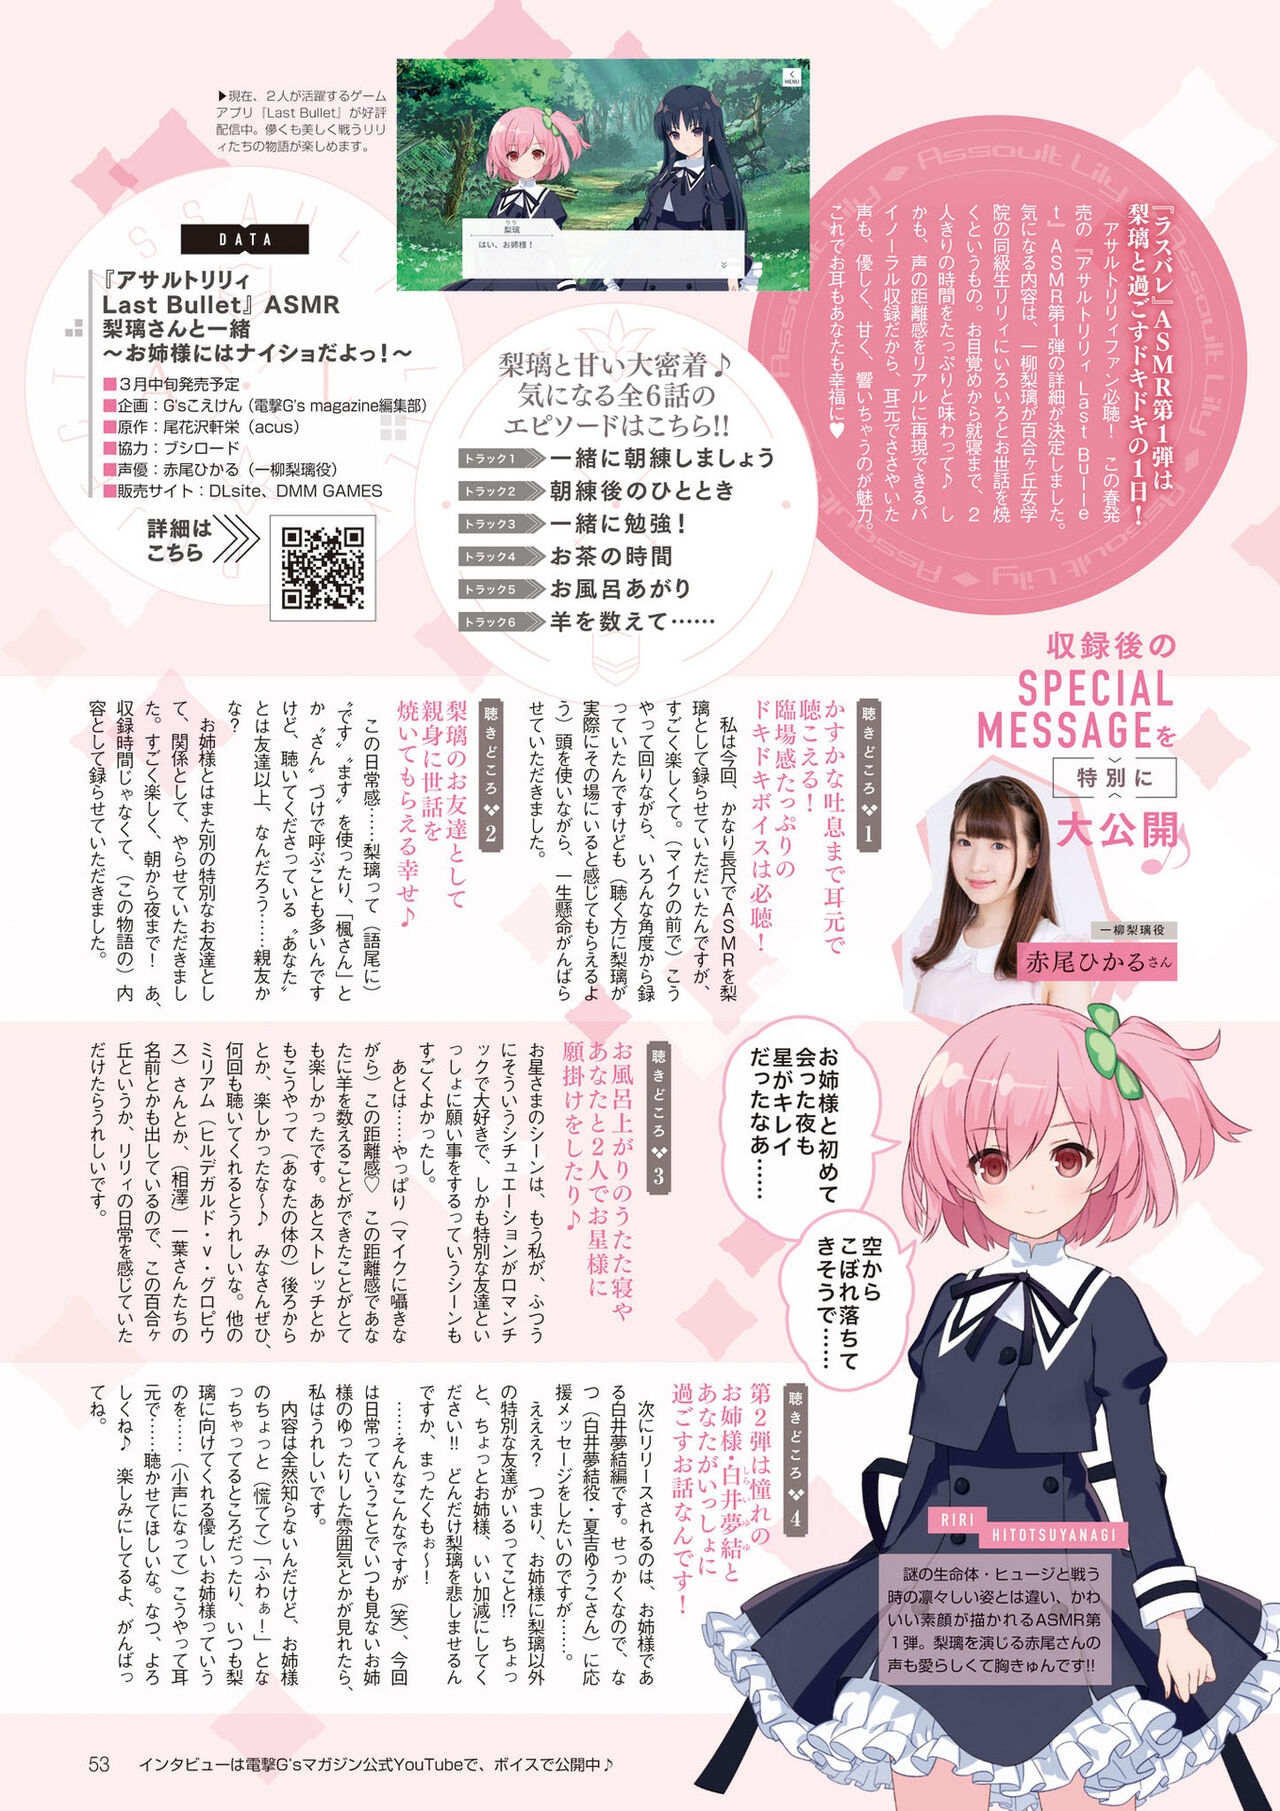 Dengeki G's Magazine #297 - April 2022 50